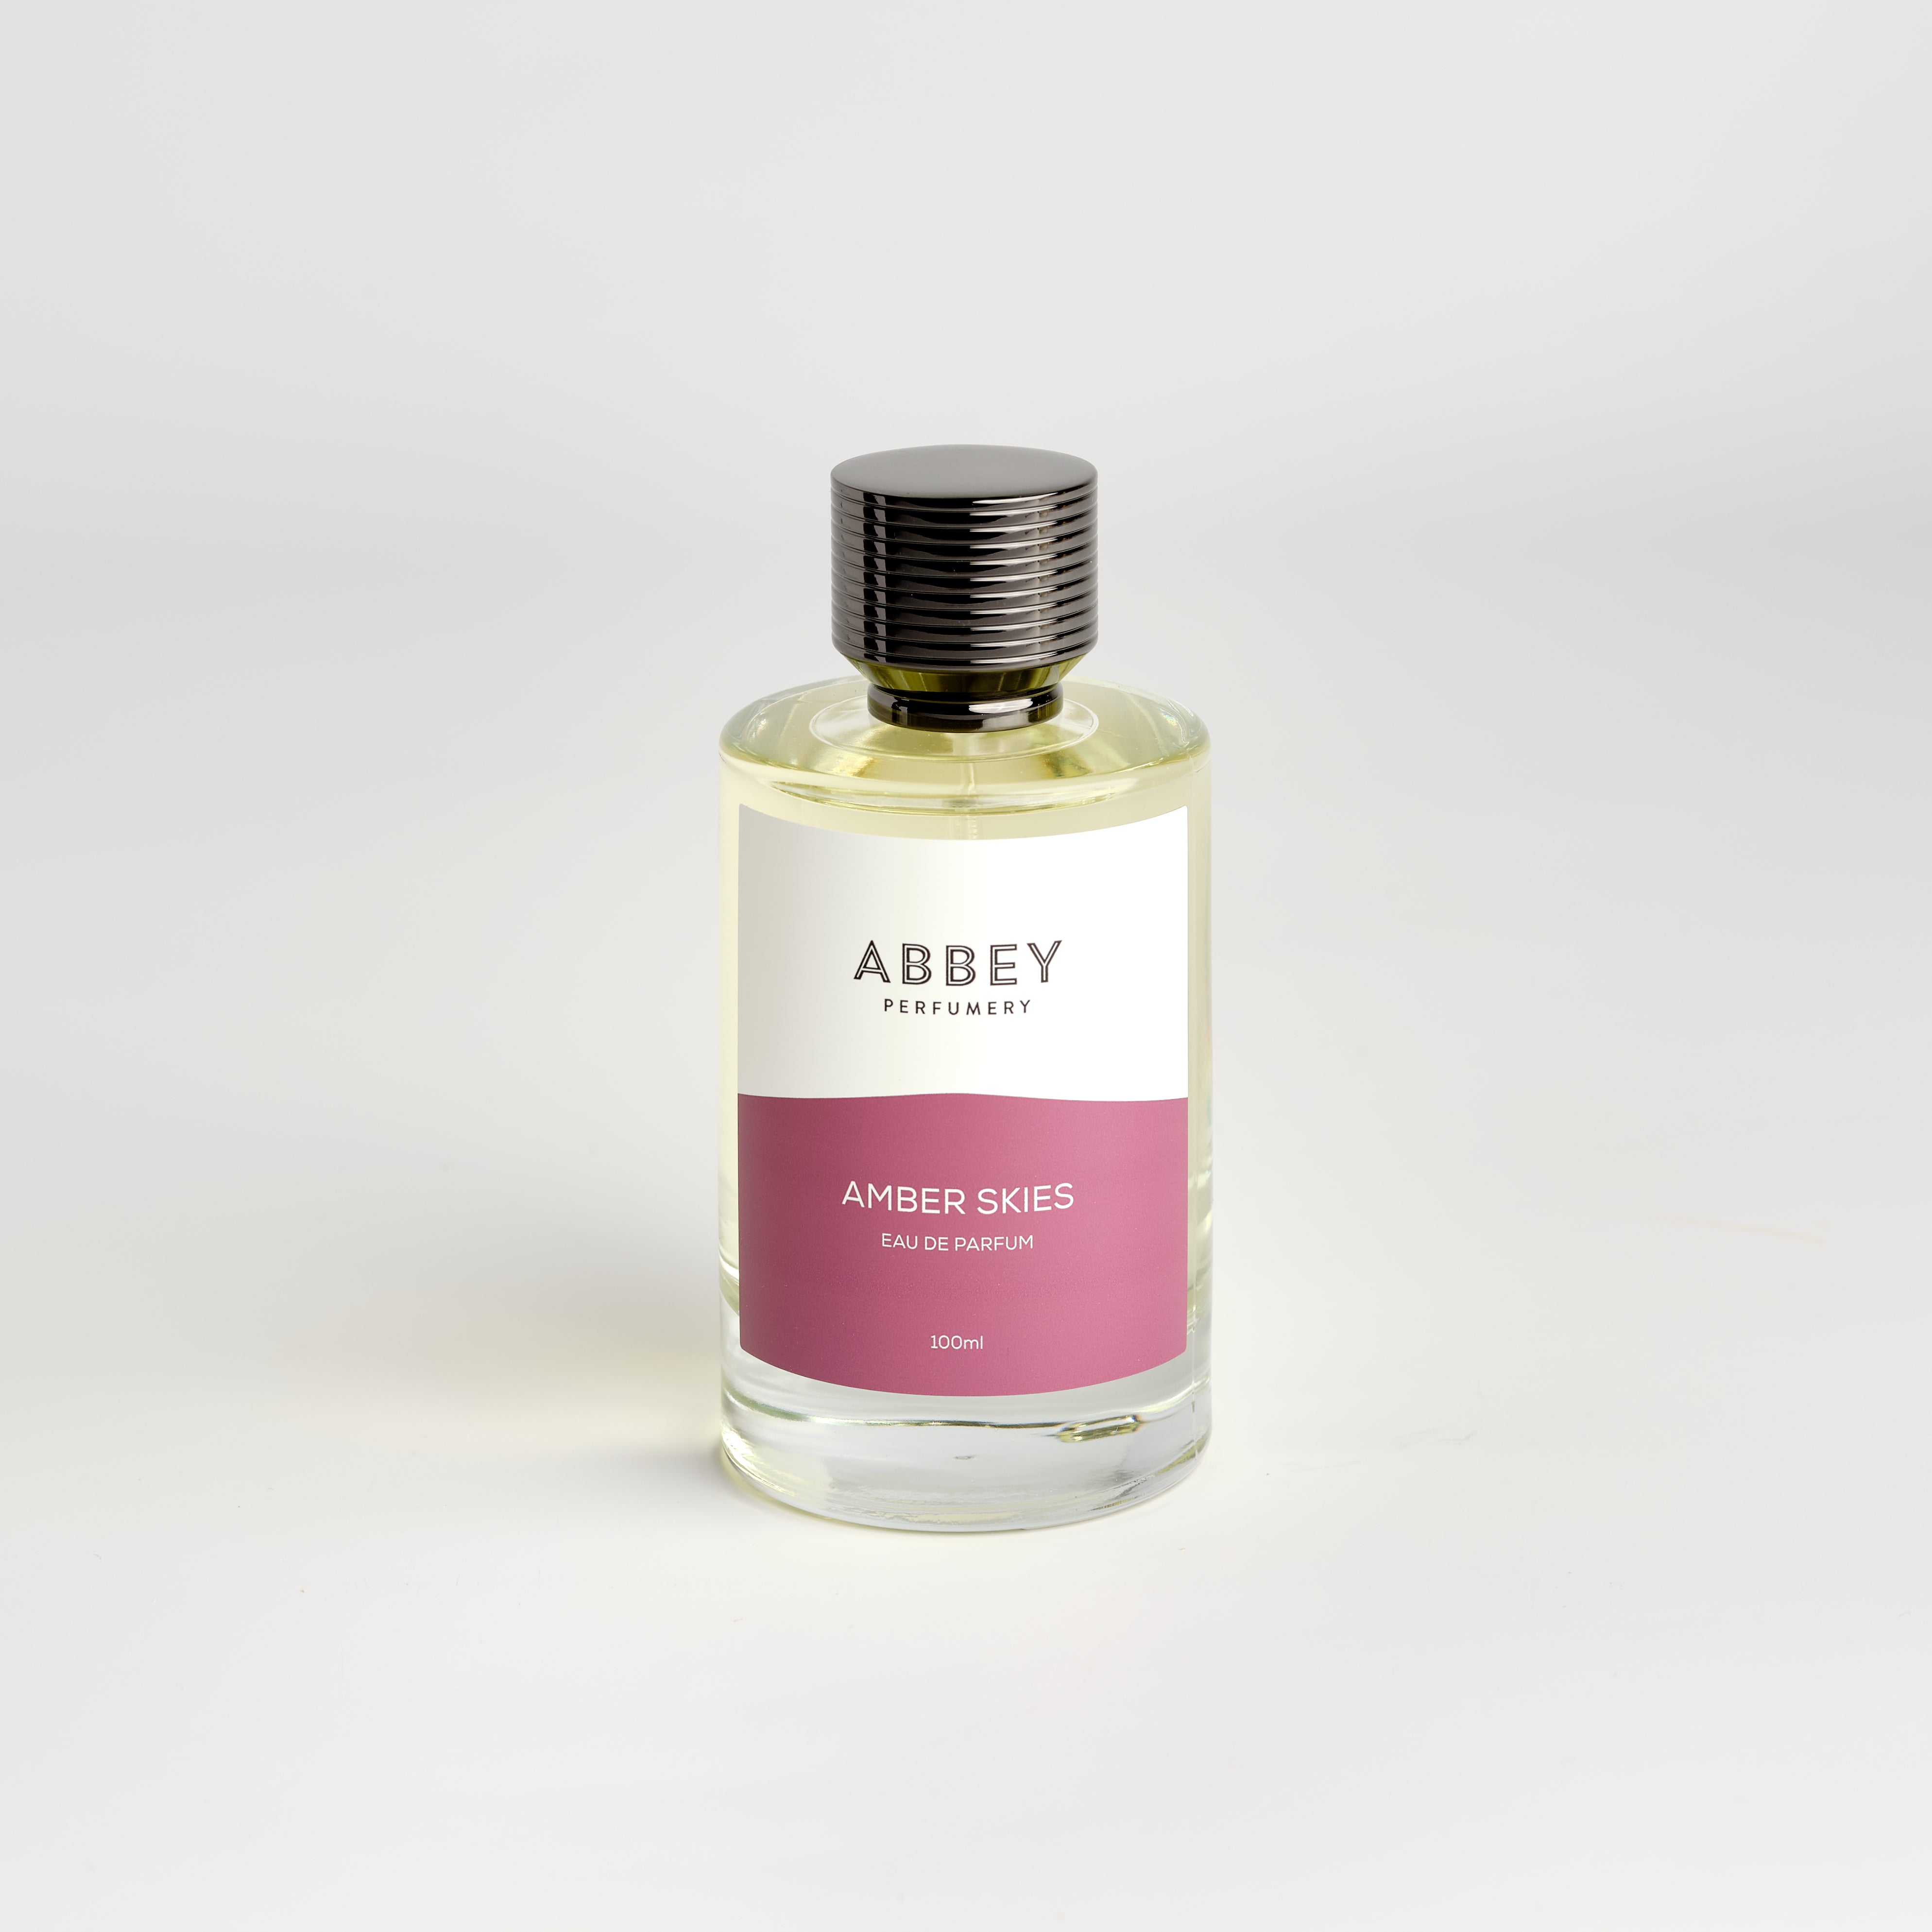 Amber Skies perfume bottle 100ml on white background